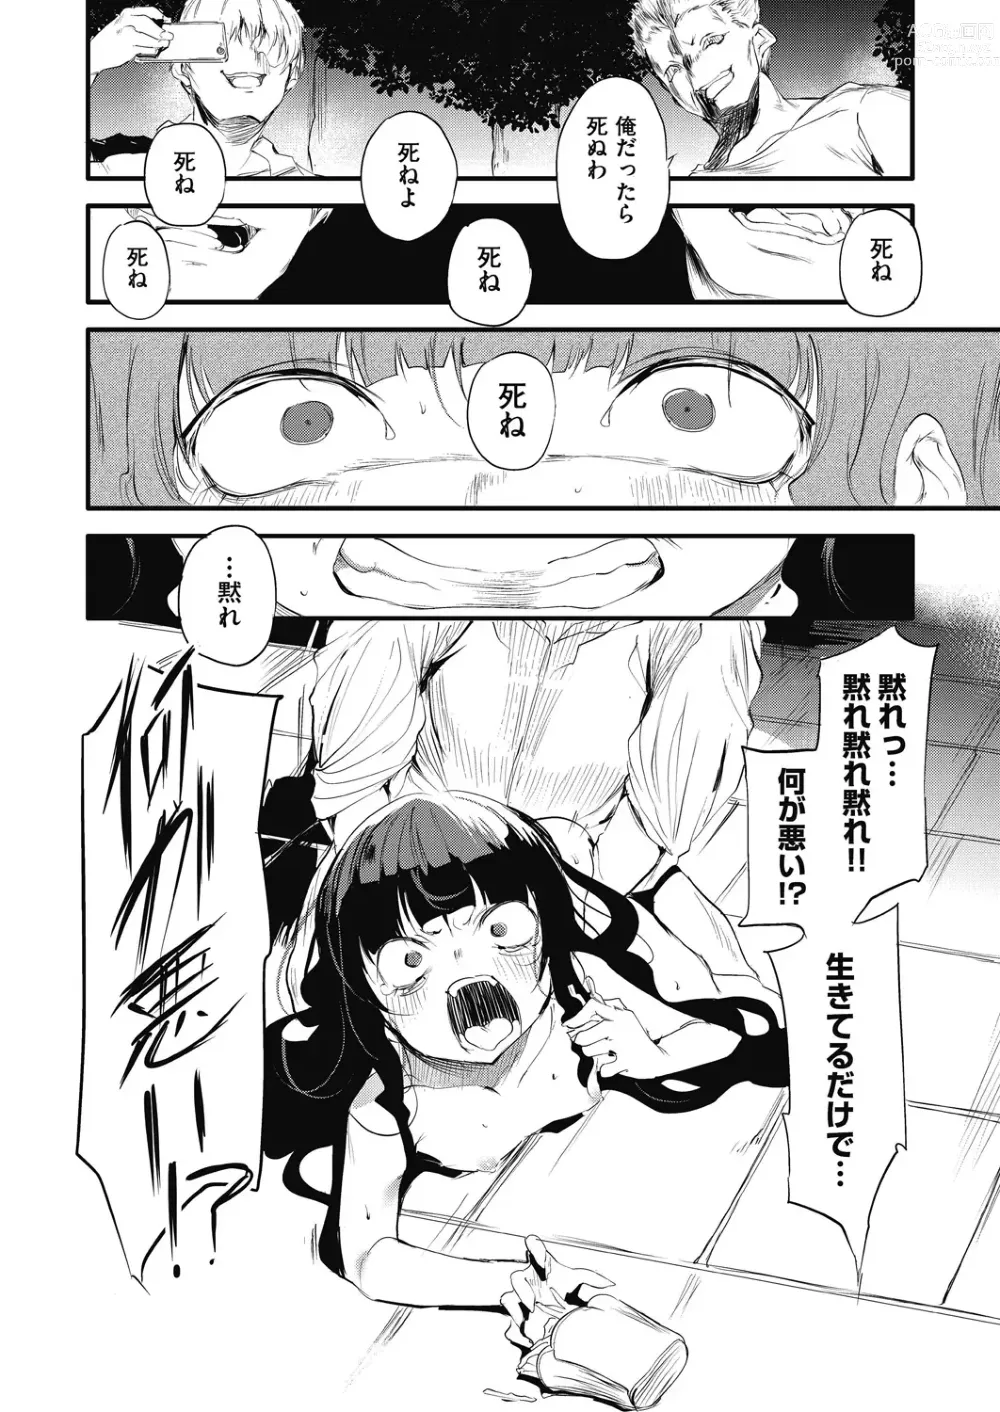 Page 198 of manga Shinme Tori - symmetry